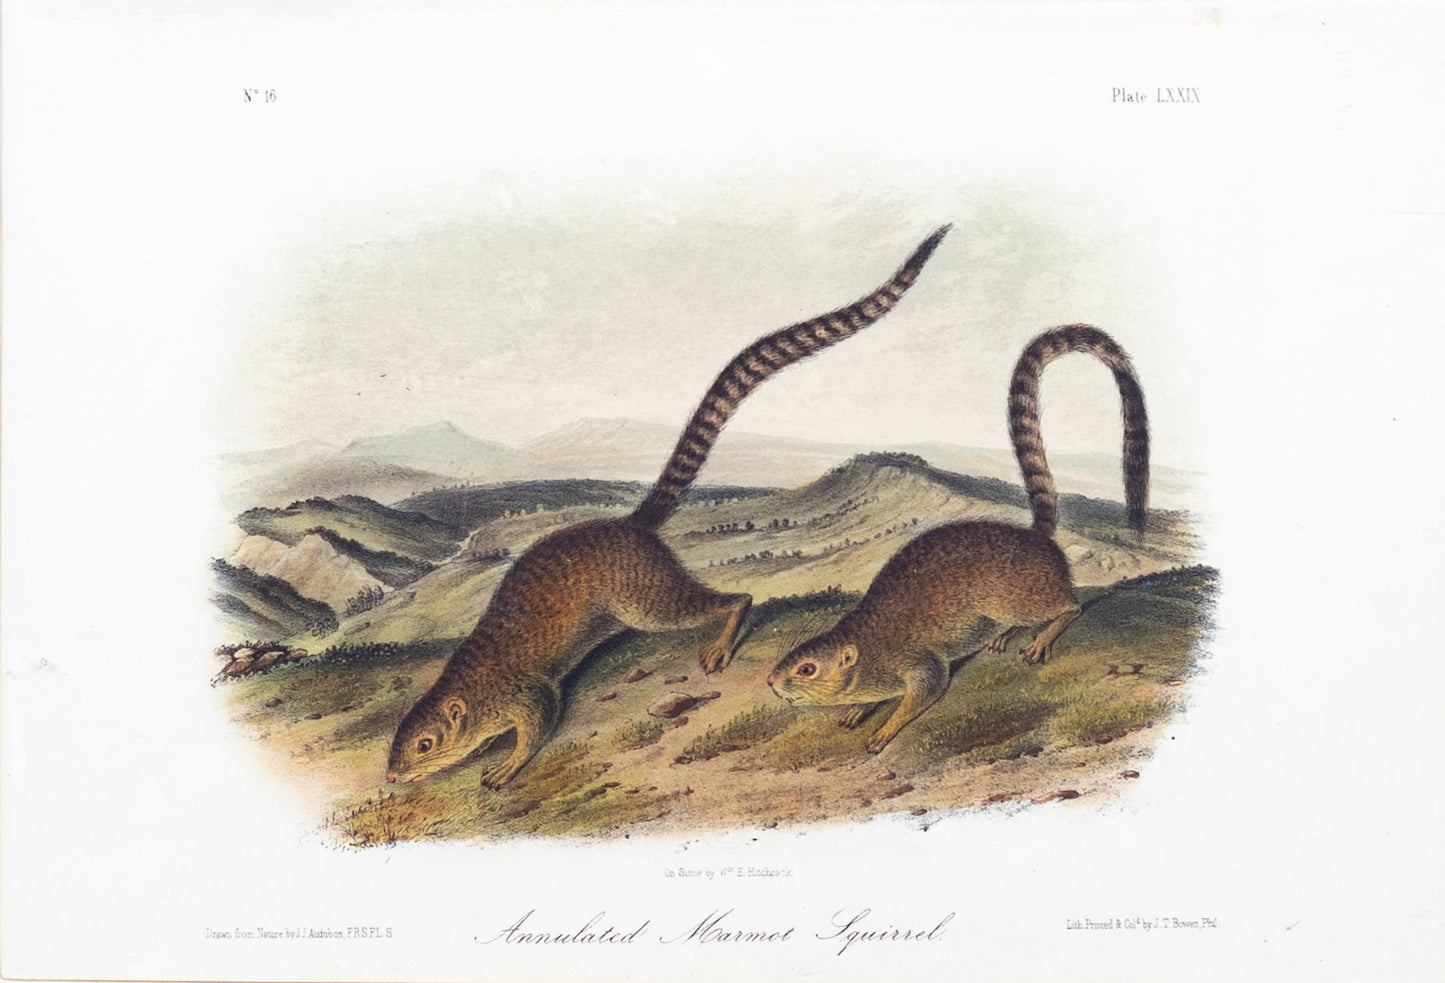 John James Audubon (1785-1851) Annulated Marmot Squirrel, Plate 79, Octavo